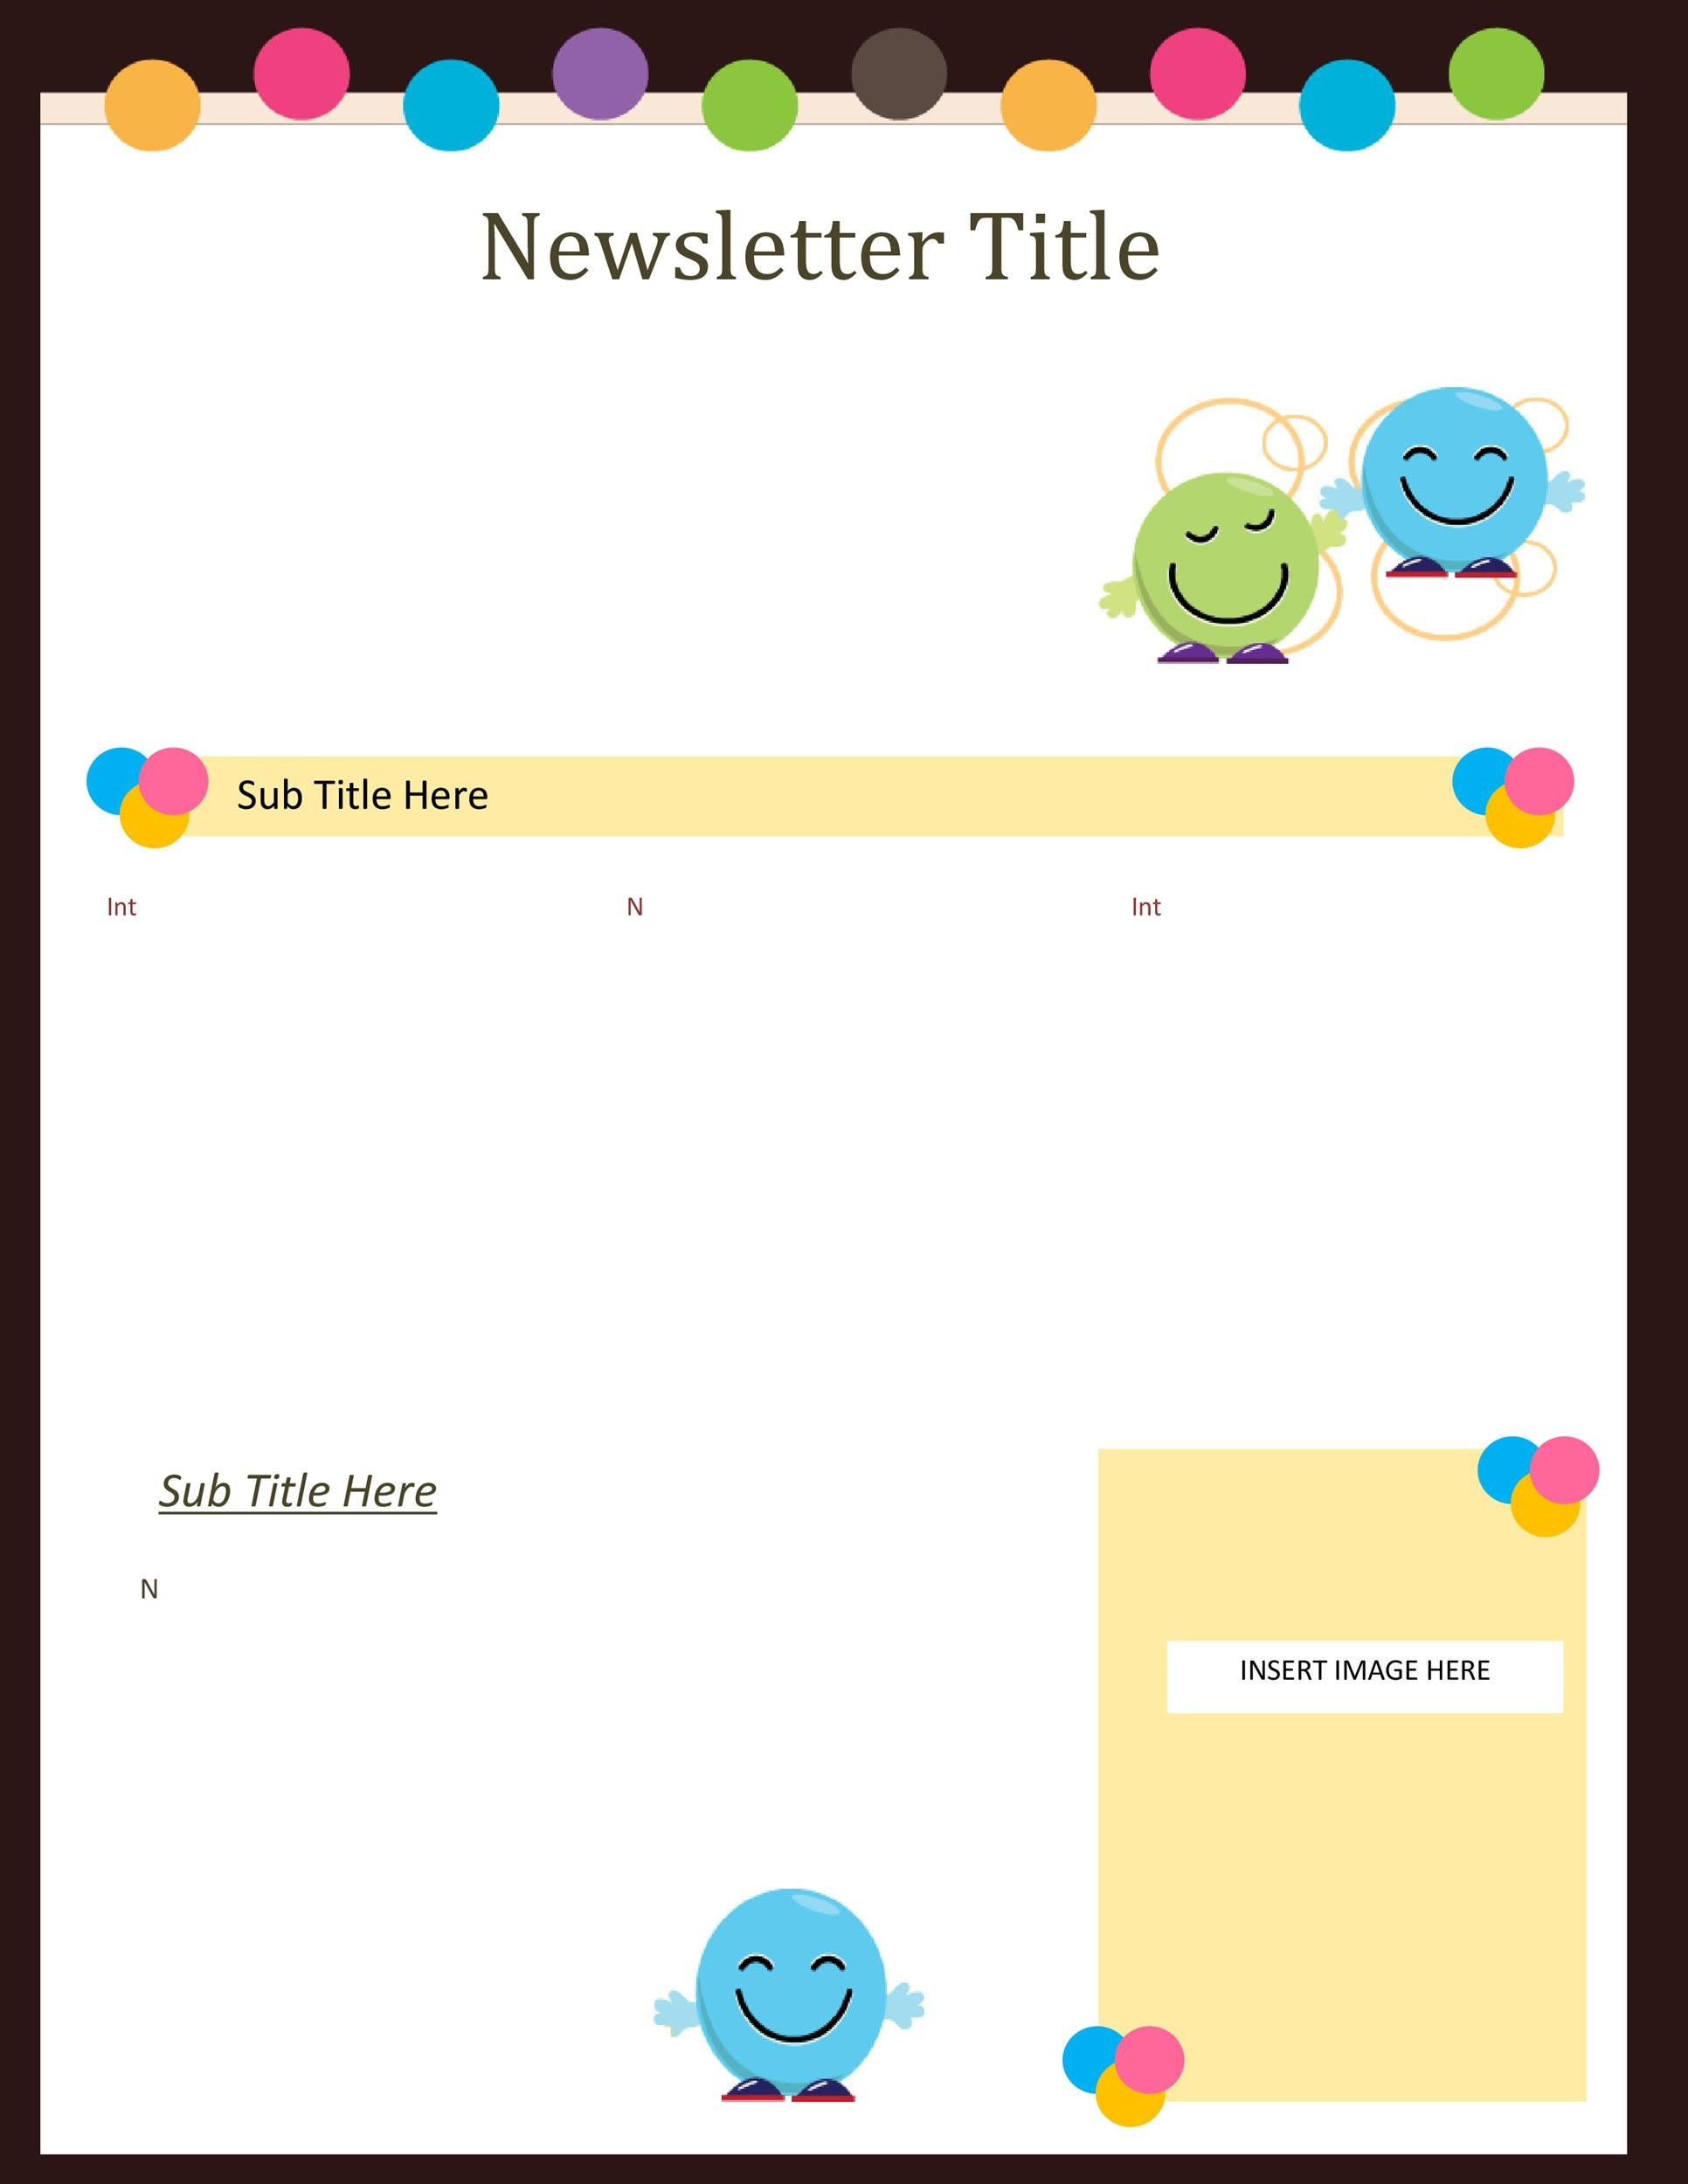 Newsletter Template for Preschool 50 Creative Preschool Newsletter Templates Tips